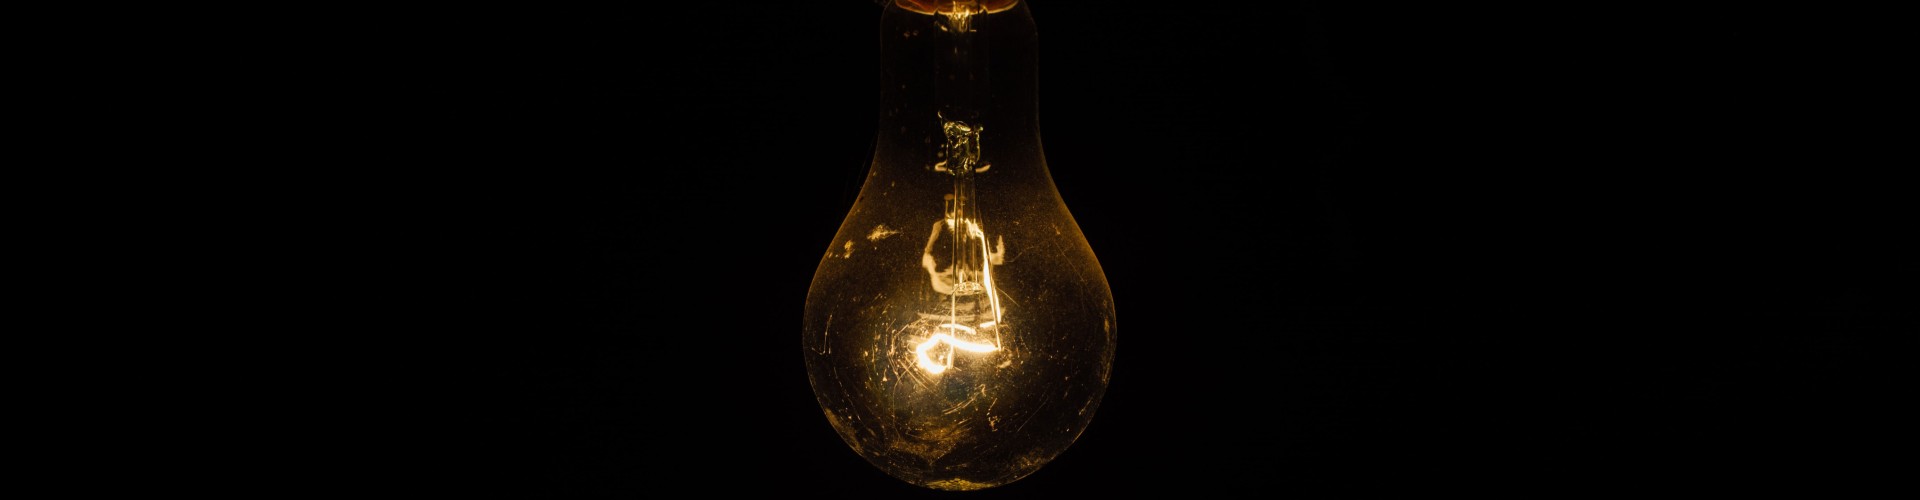 A light bulb in the dark